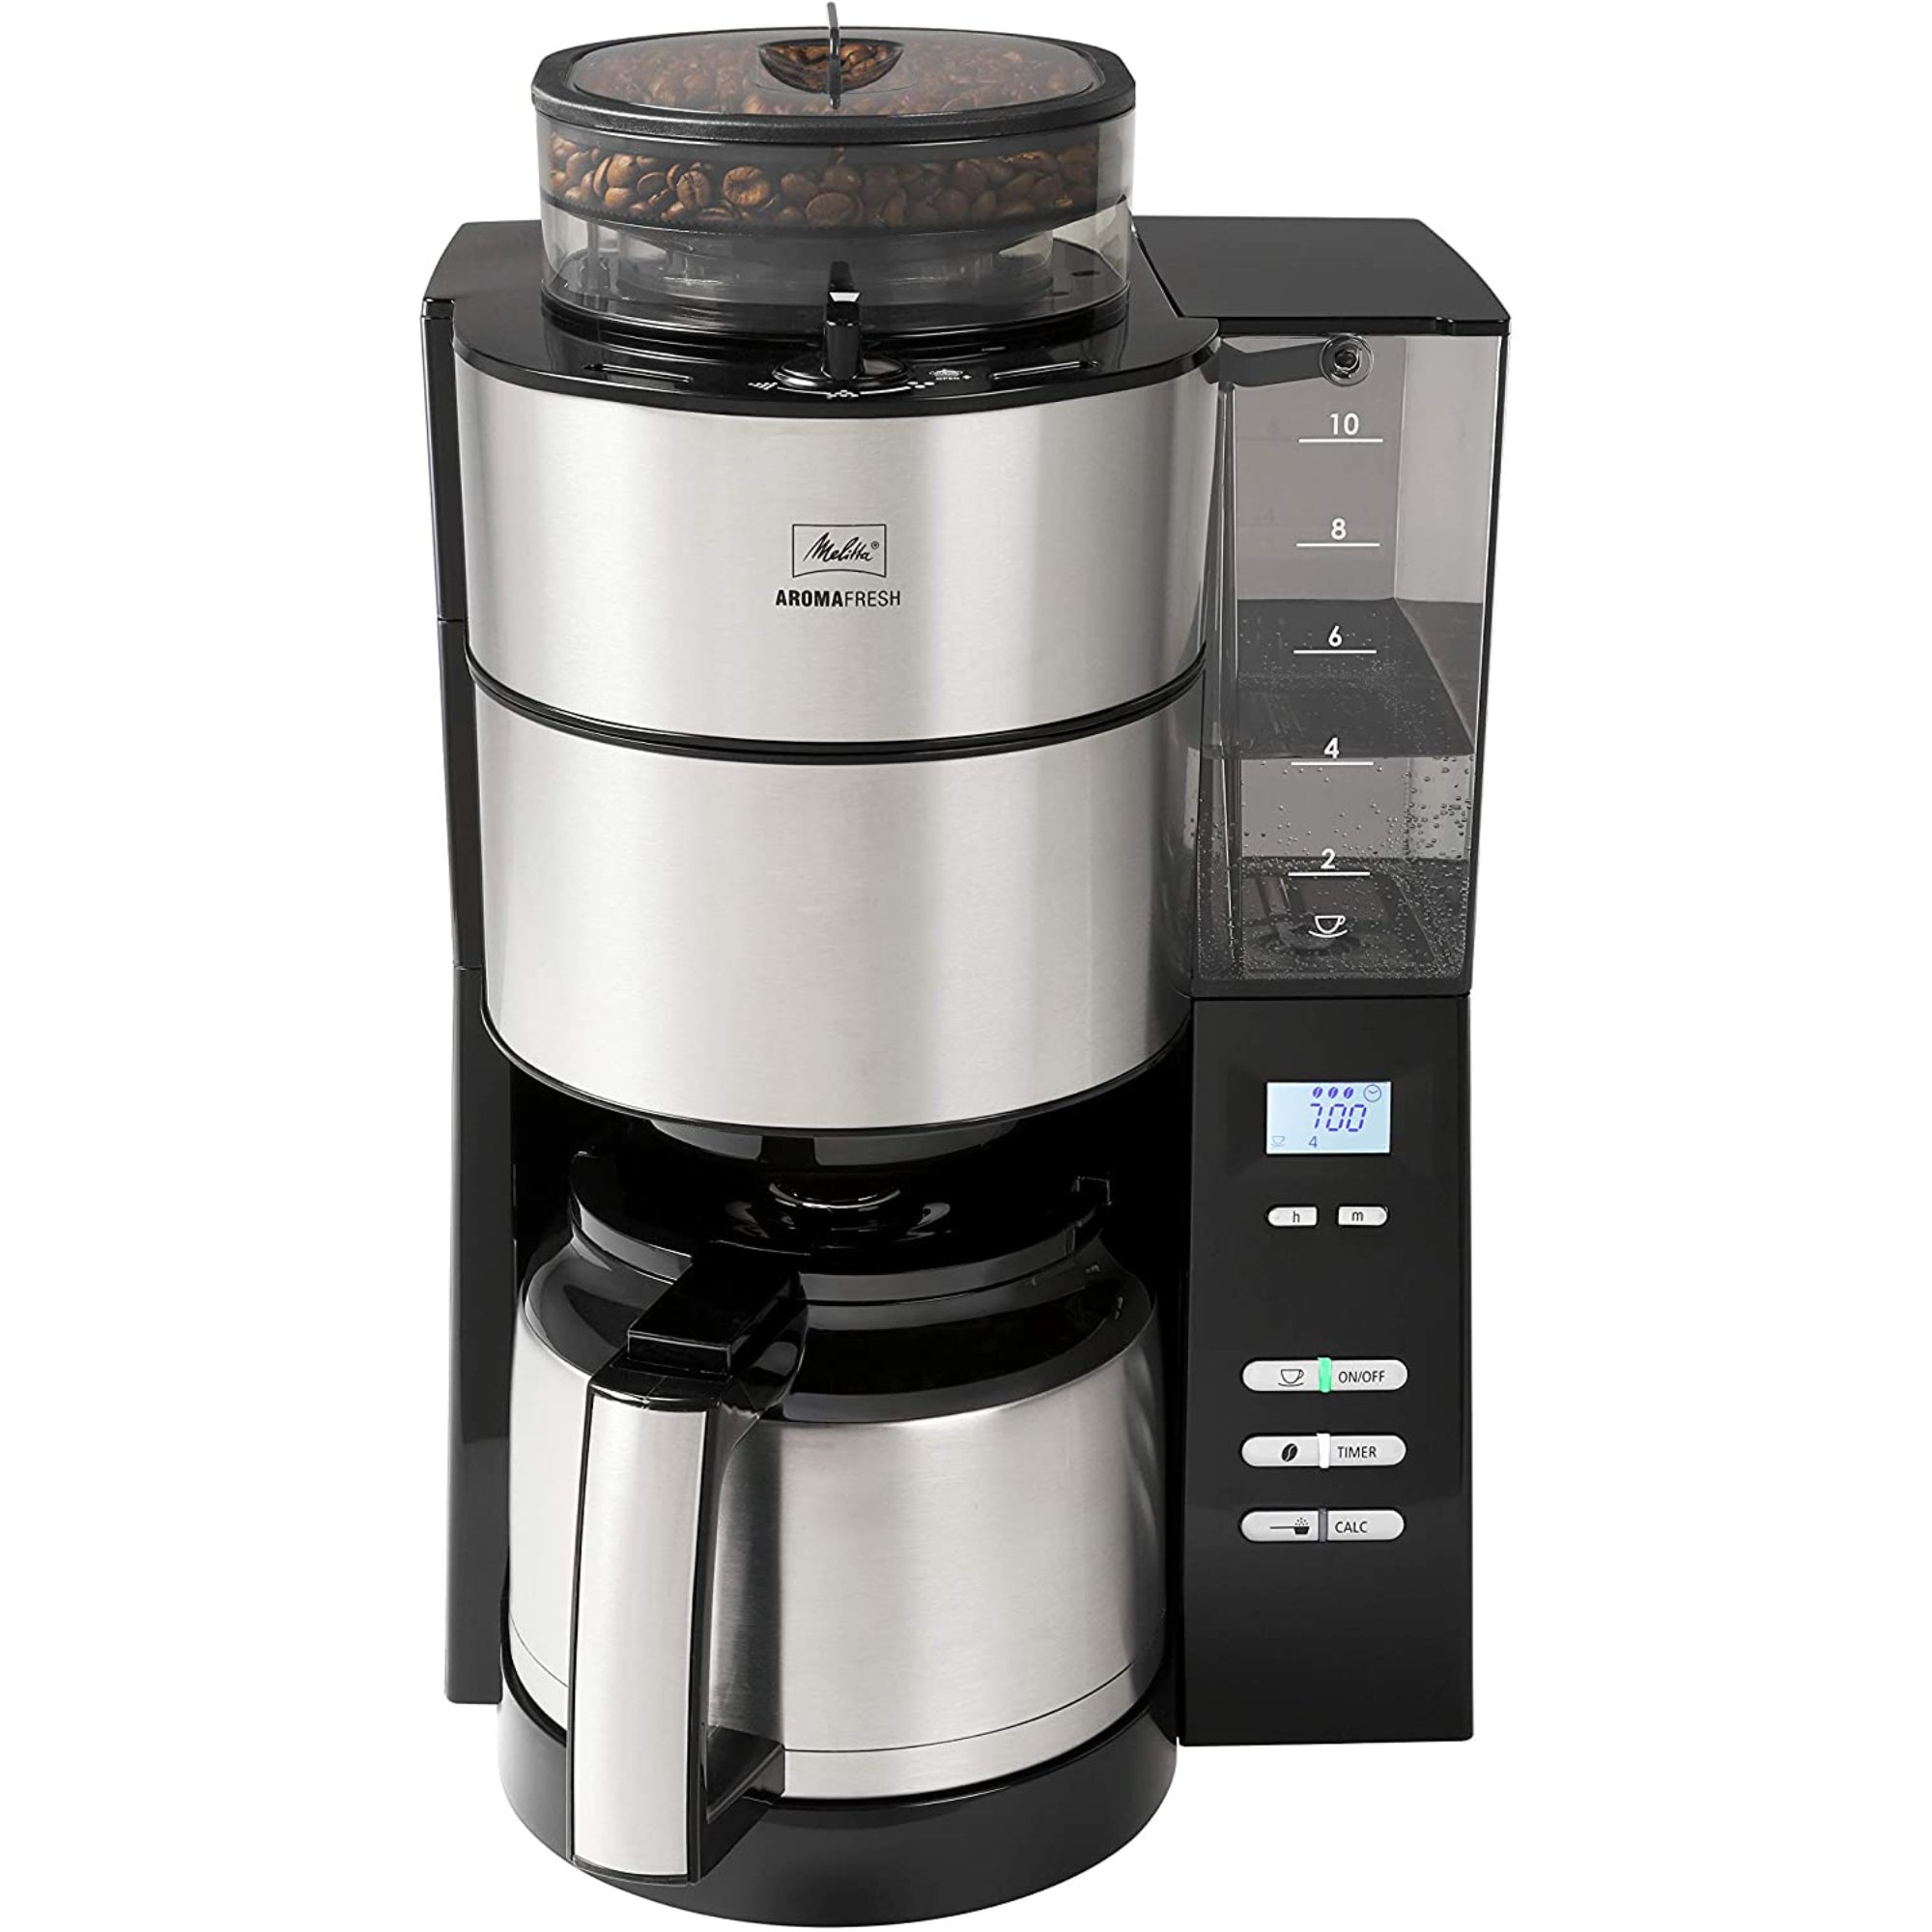 Melitta Aromafresh Grind & Brew Thermal Filter Coffee Machine Black/Silver